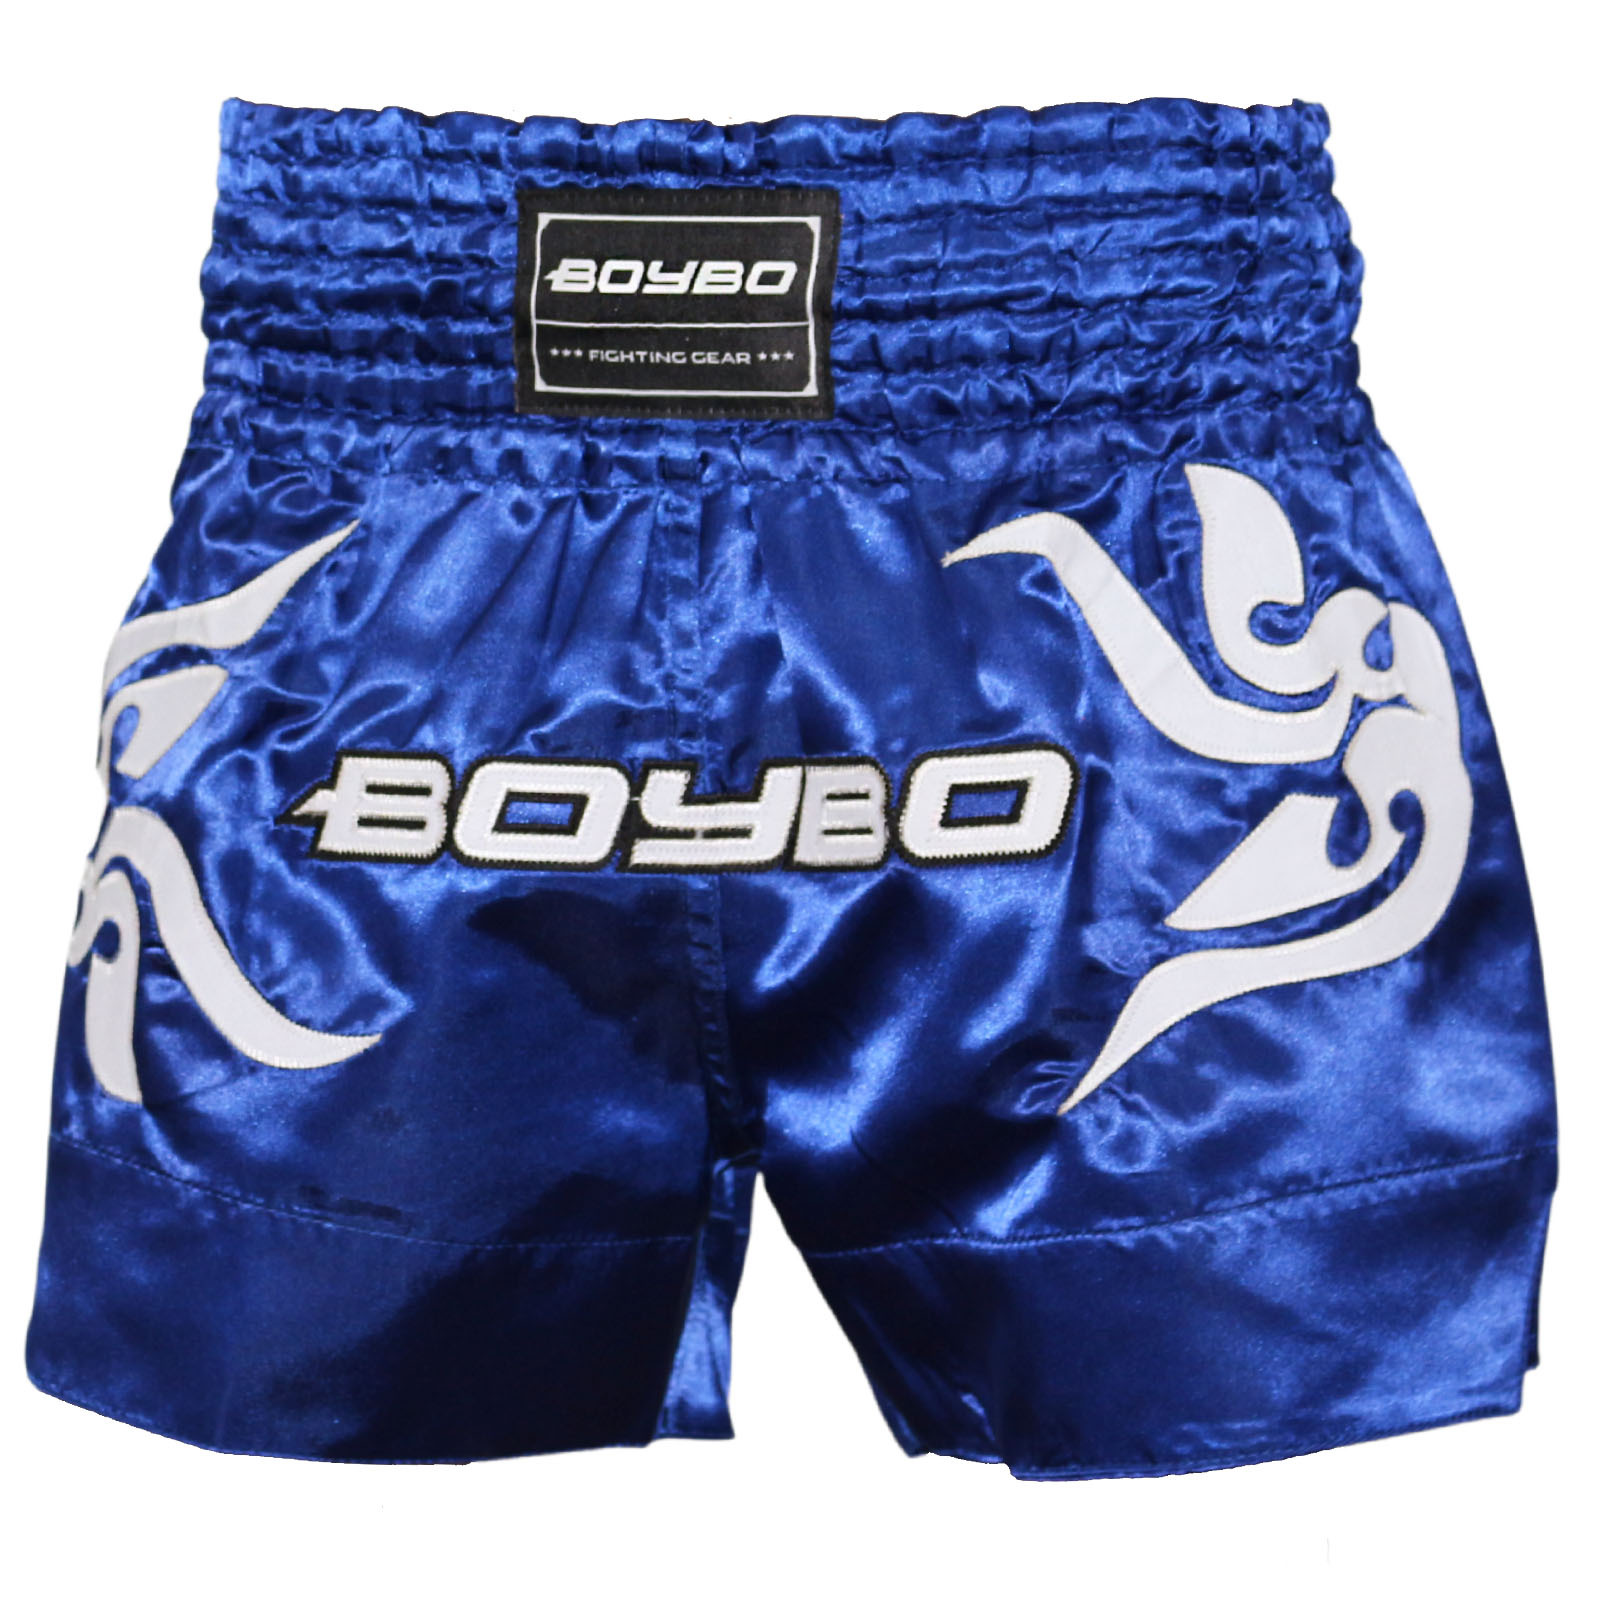 Шорты BoyBo для тайского бокса синие, BST882 (M)